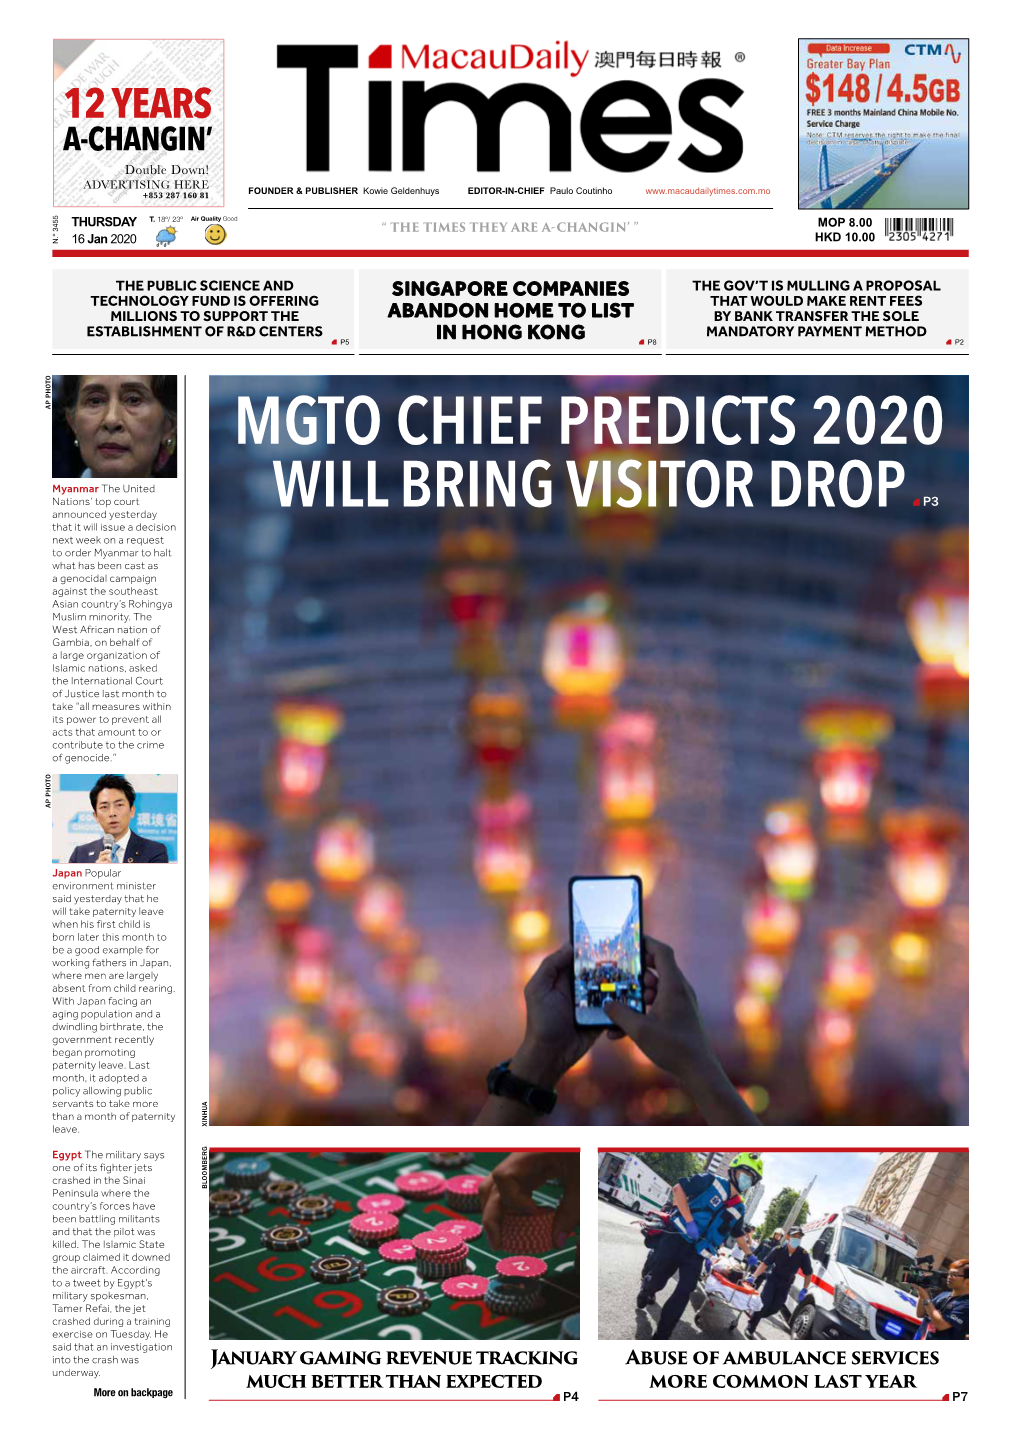 Mgto Chief Predicts 2020